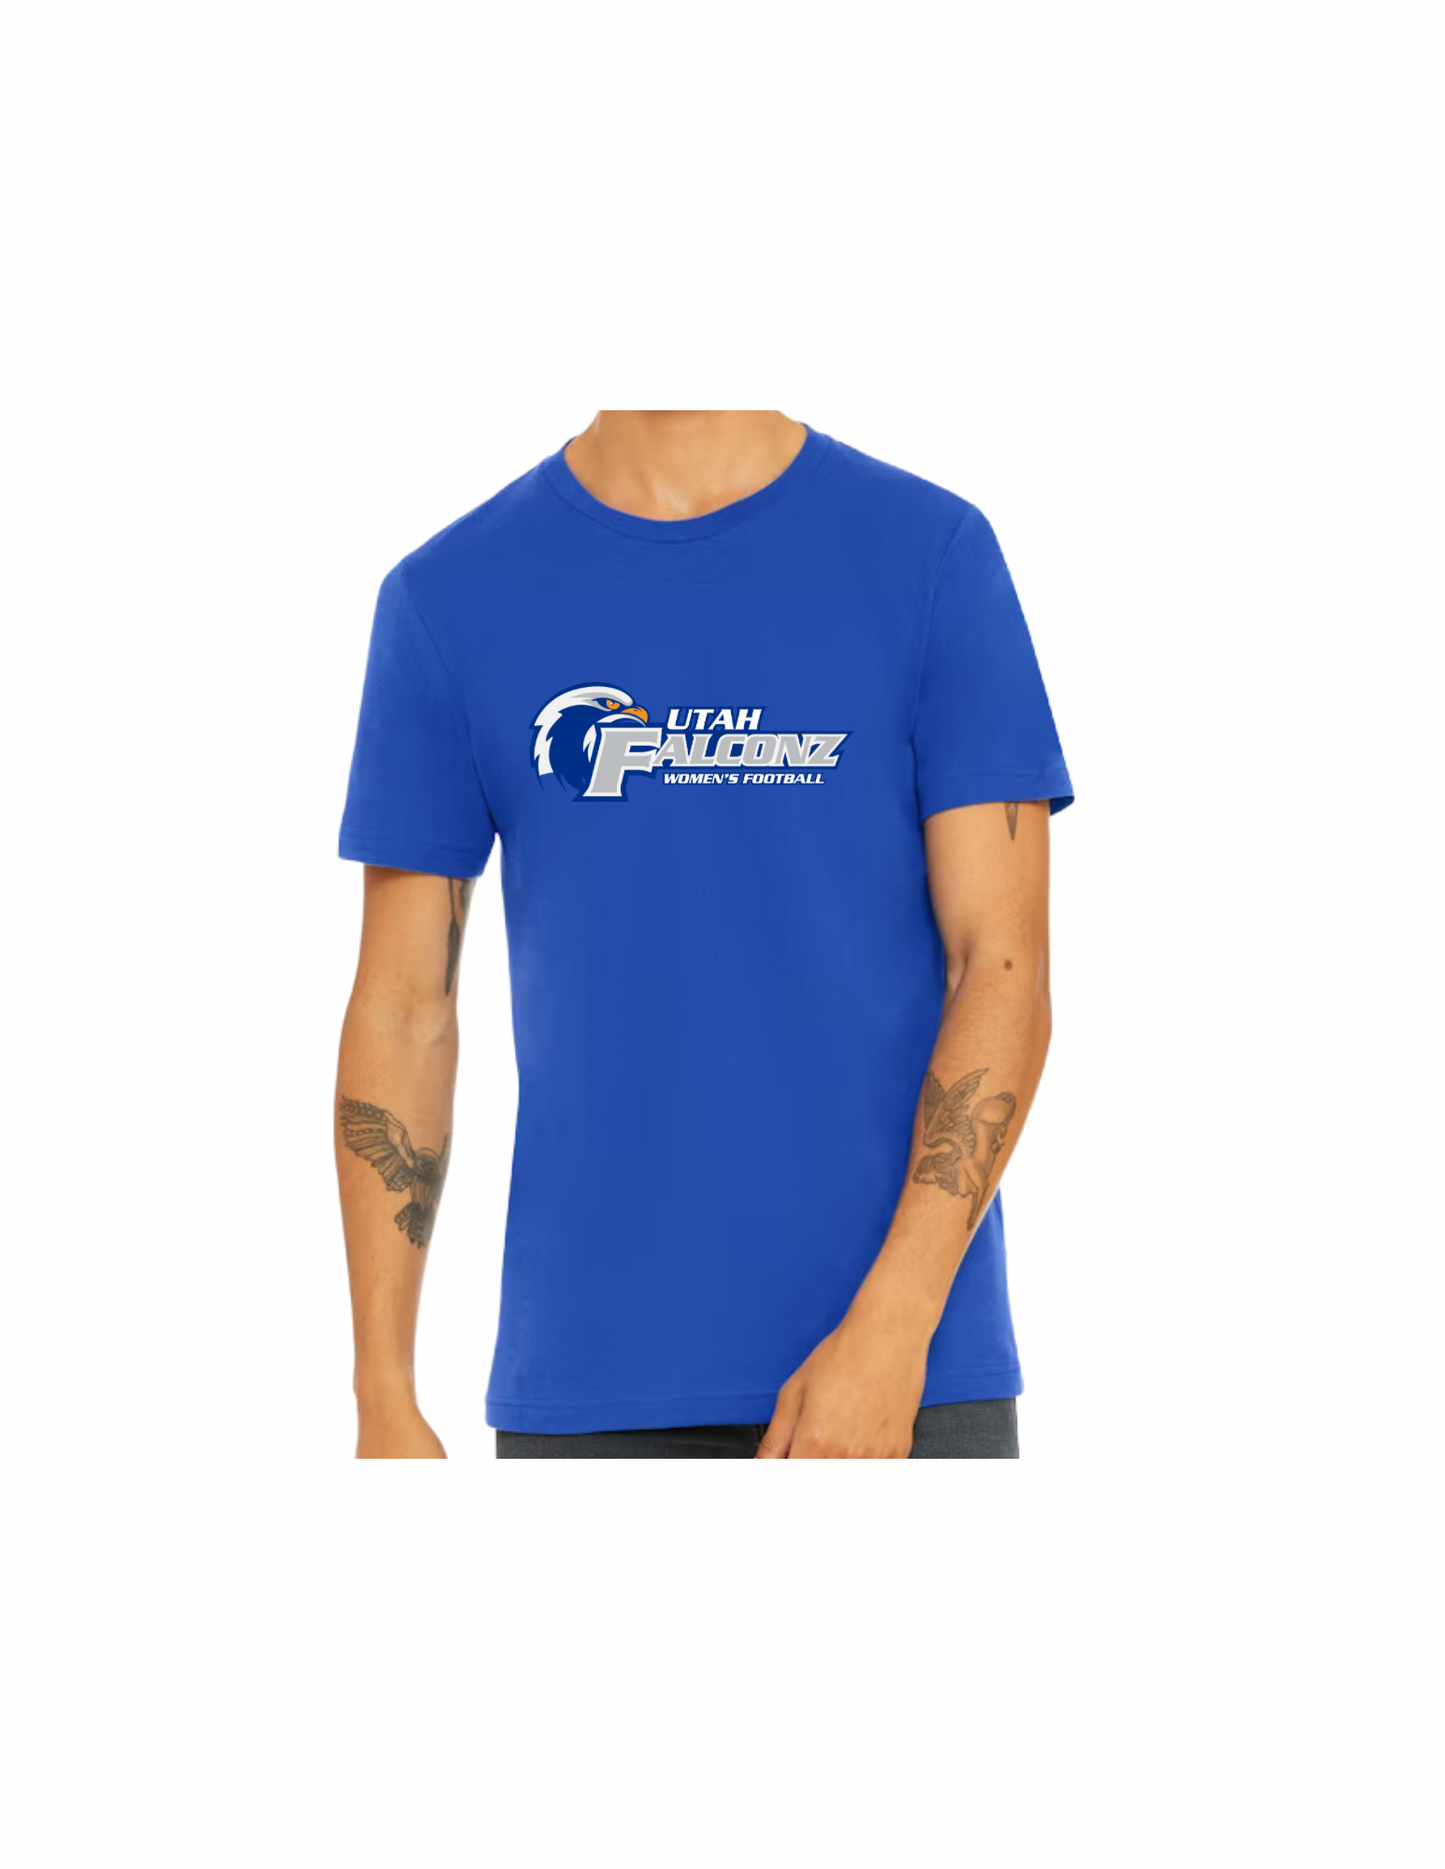 Unisex Adult Utah Falconz T-Shirt